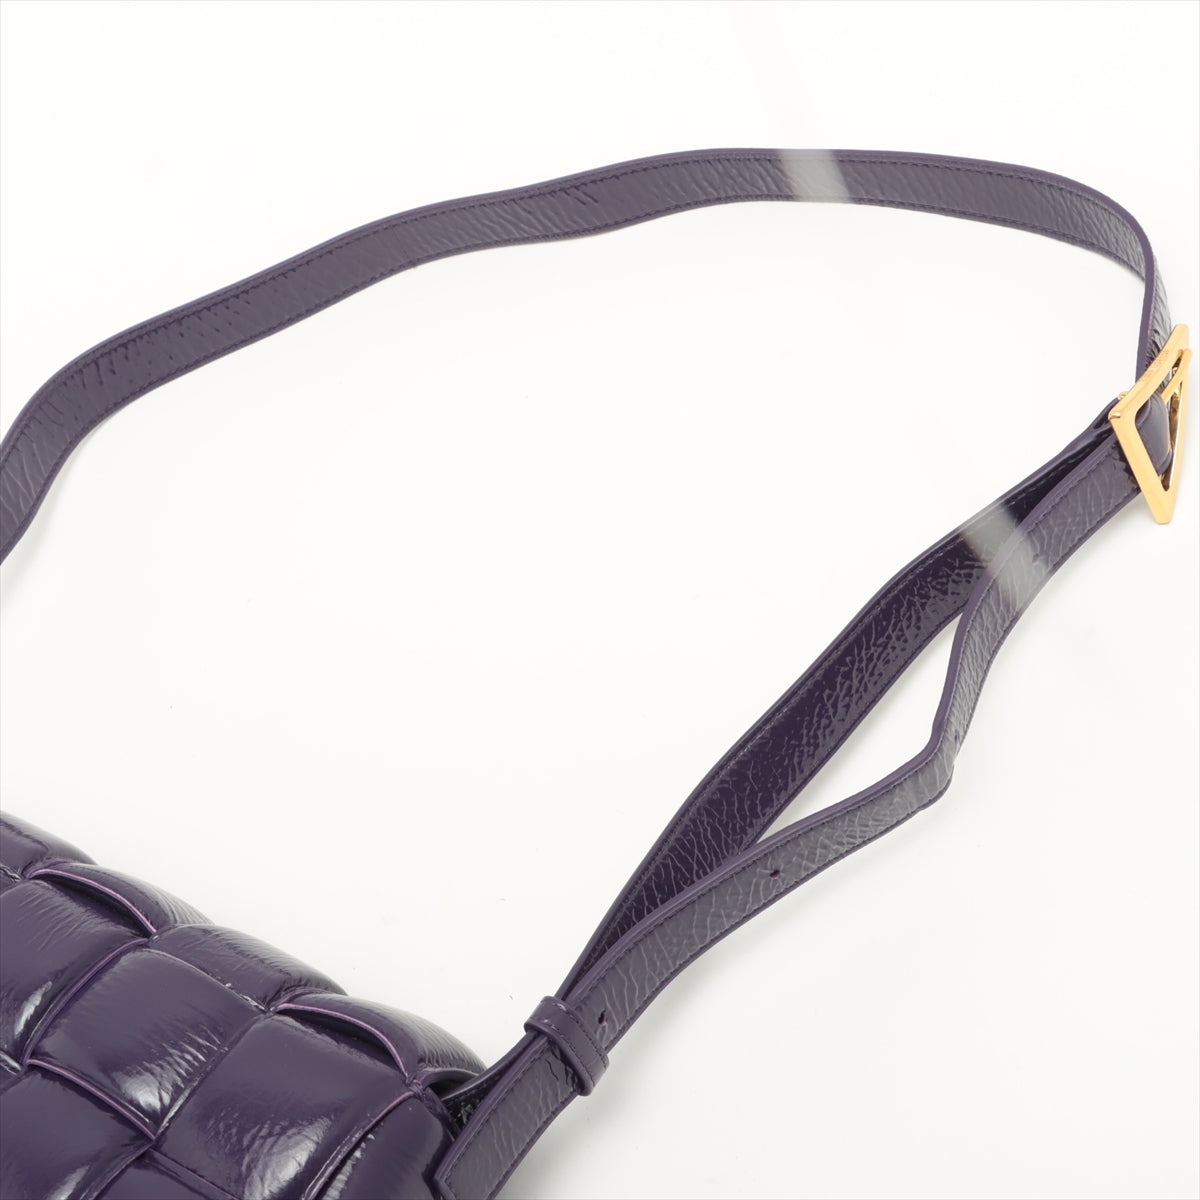 Bottega Veneta maxi intrecciato padded cassette Patent leather Shoulder bag Purple